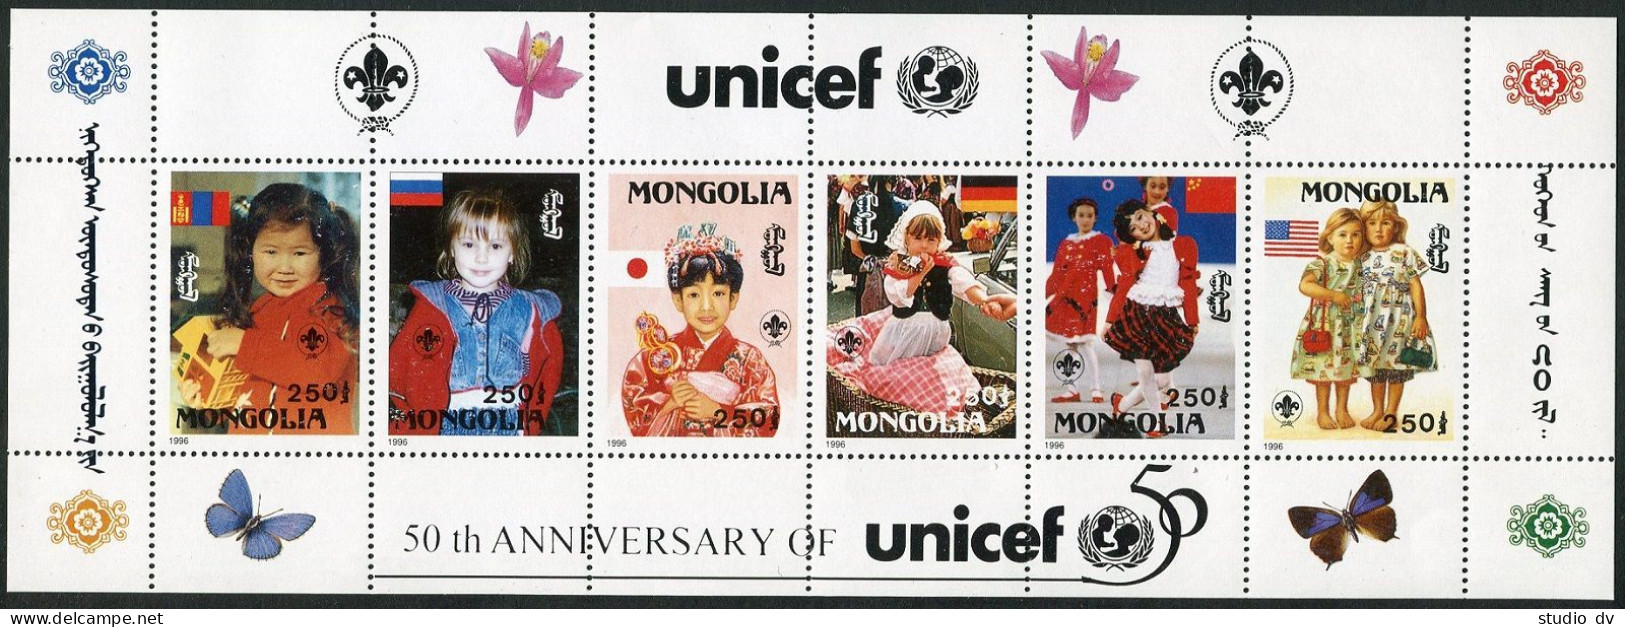 Mongolia 2247J-Oq Sheet,MNH. UNICEF 1996.Children,Scouting Emblem.Flags. - Mongolië